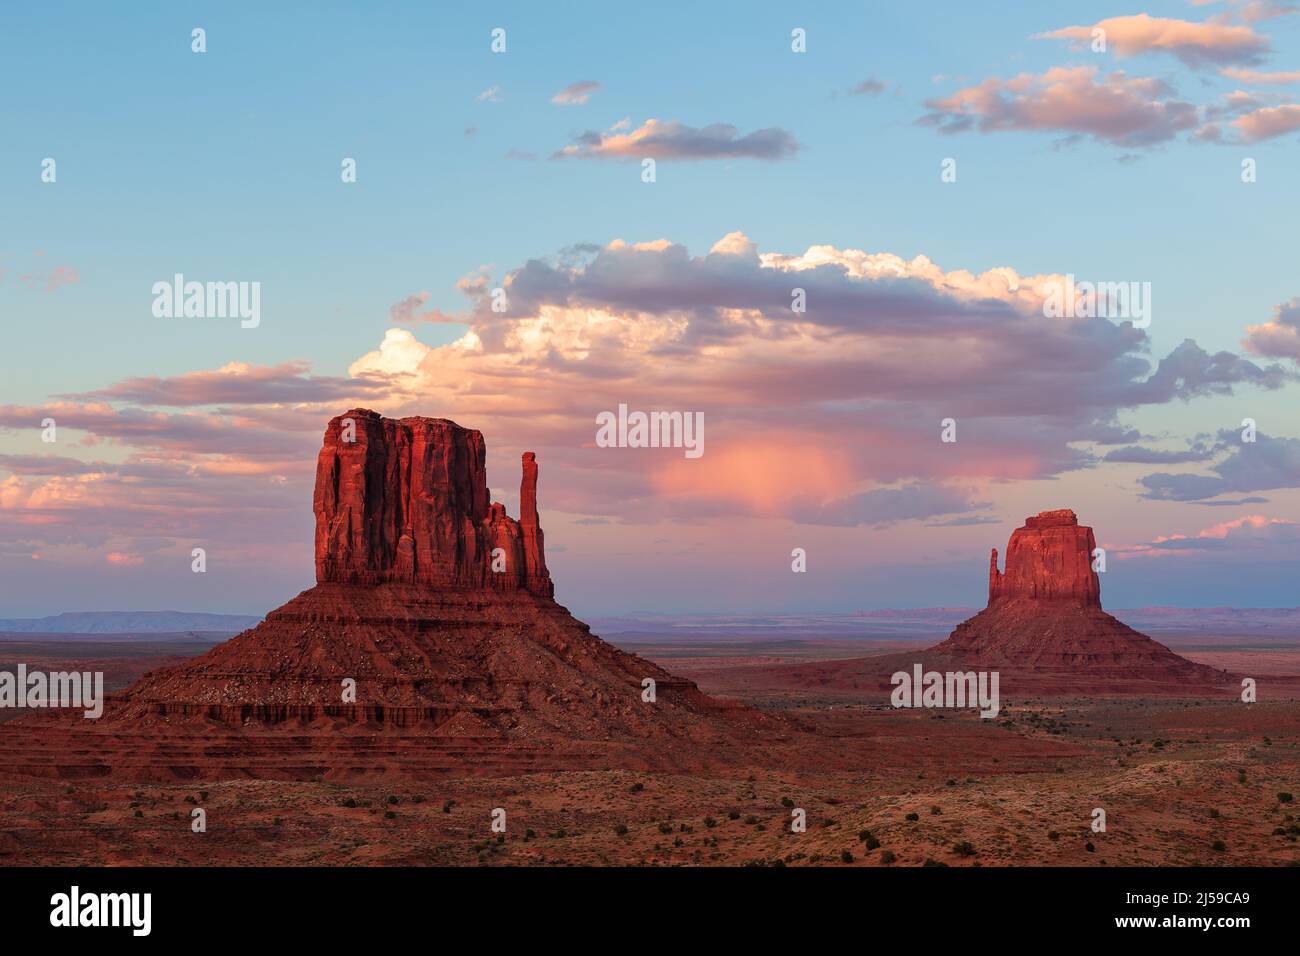 Monument Valley Navajo Tribal Park al atardecer Foto de stock